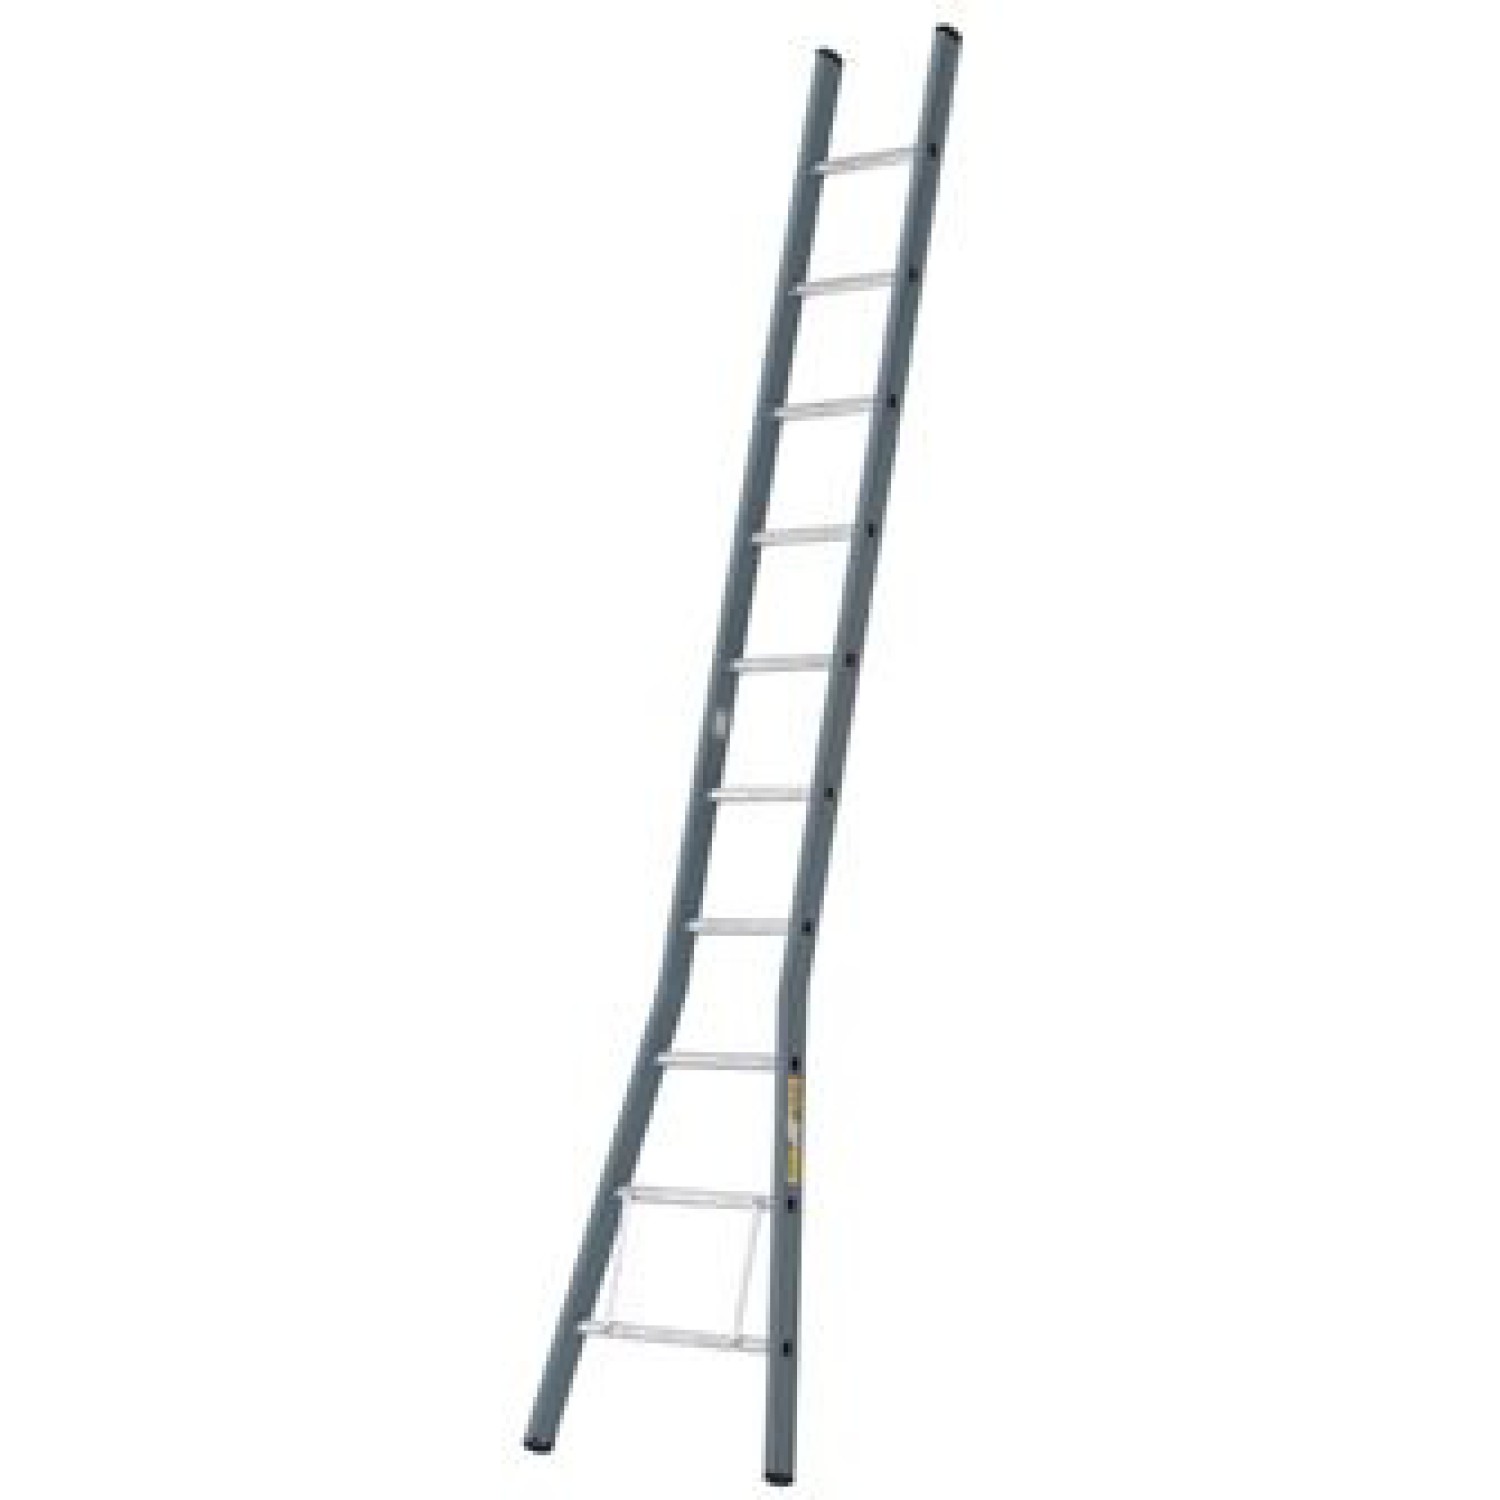 dirks enkele uitgebogen ladder 525 meter